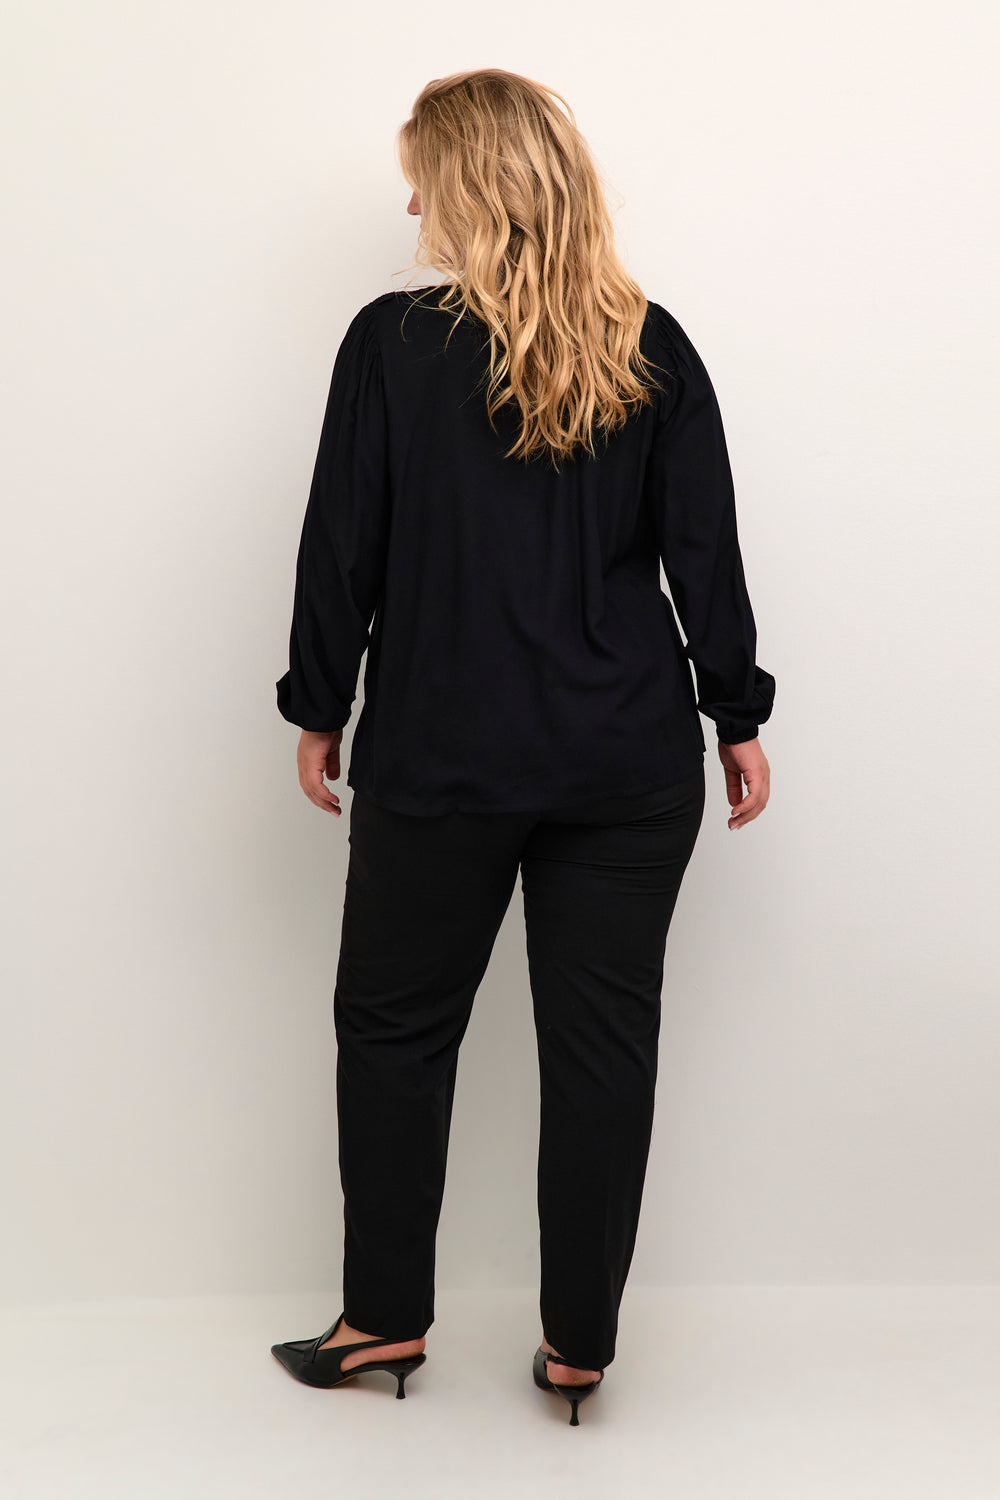 zwarte blouse met kant op schouders - kaffe curve - - grote maten - dameskleding - kledingwinkel - herent - leuven